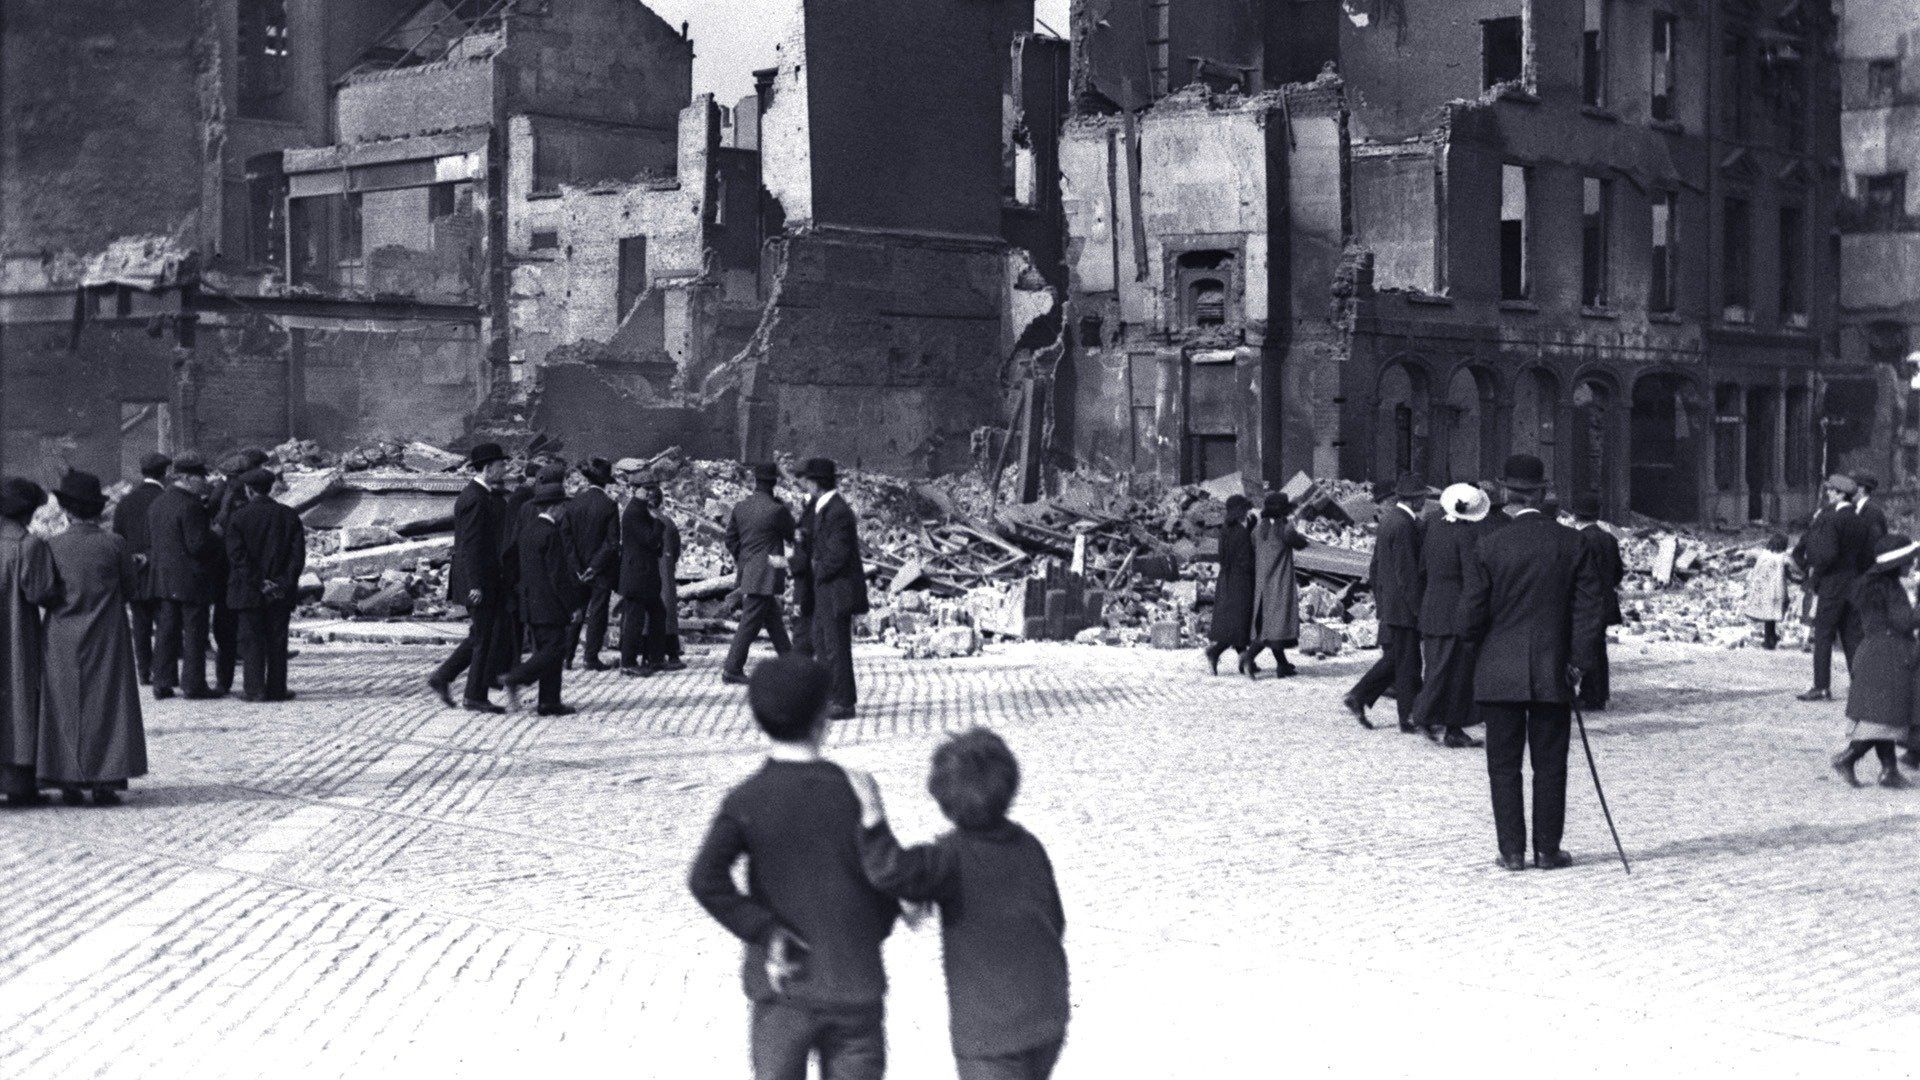 1916: The Irish Rebellion Backdrop